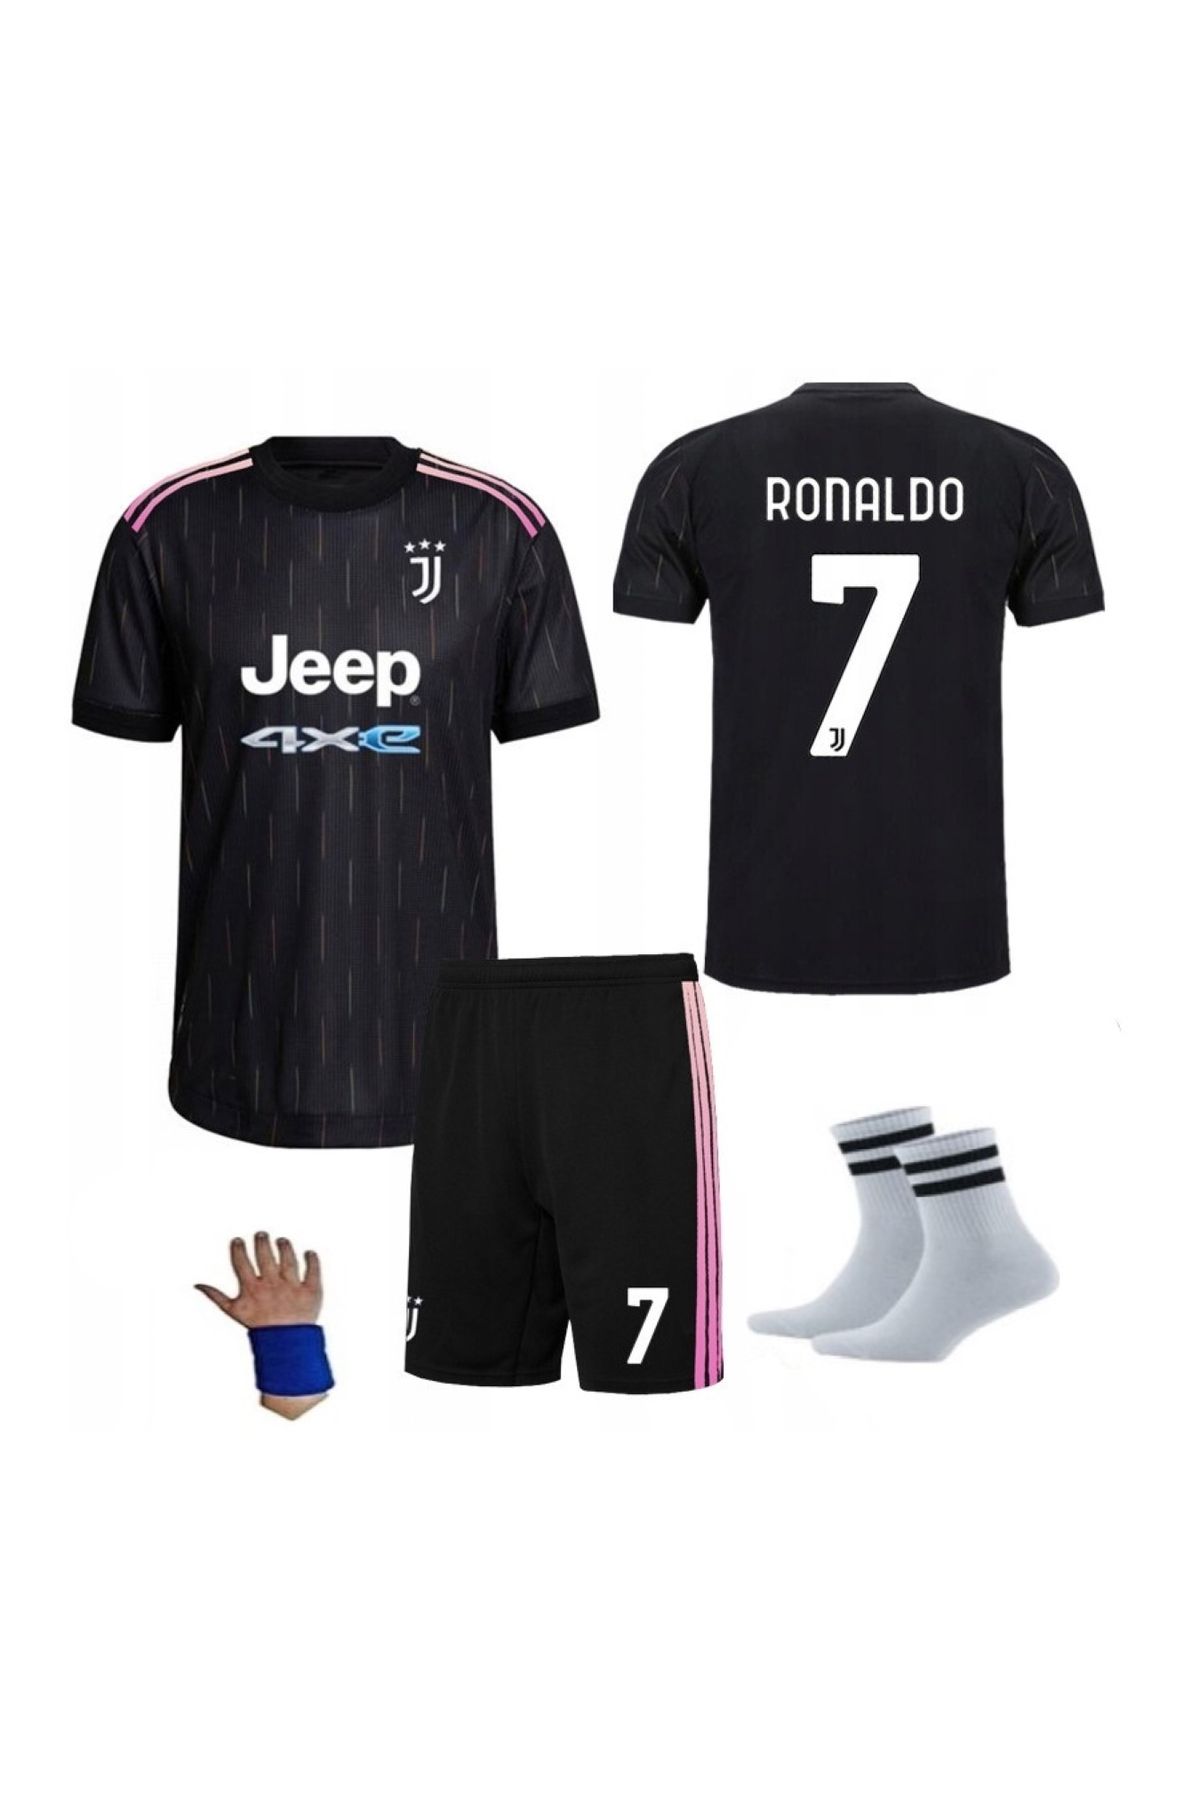 yenteks Juventus Retro Ronaldo Çocuk Futbol Forma Takımı 21/22 Sezon Siyah Deplasman 4'lü Setsmh5757